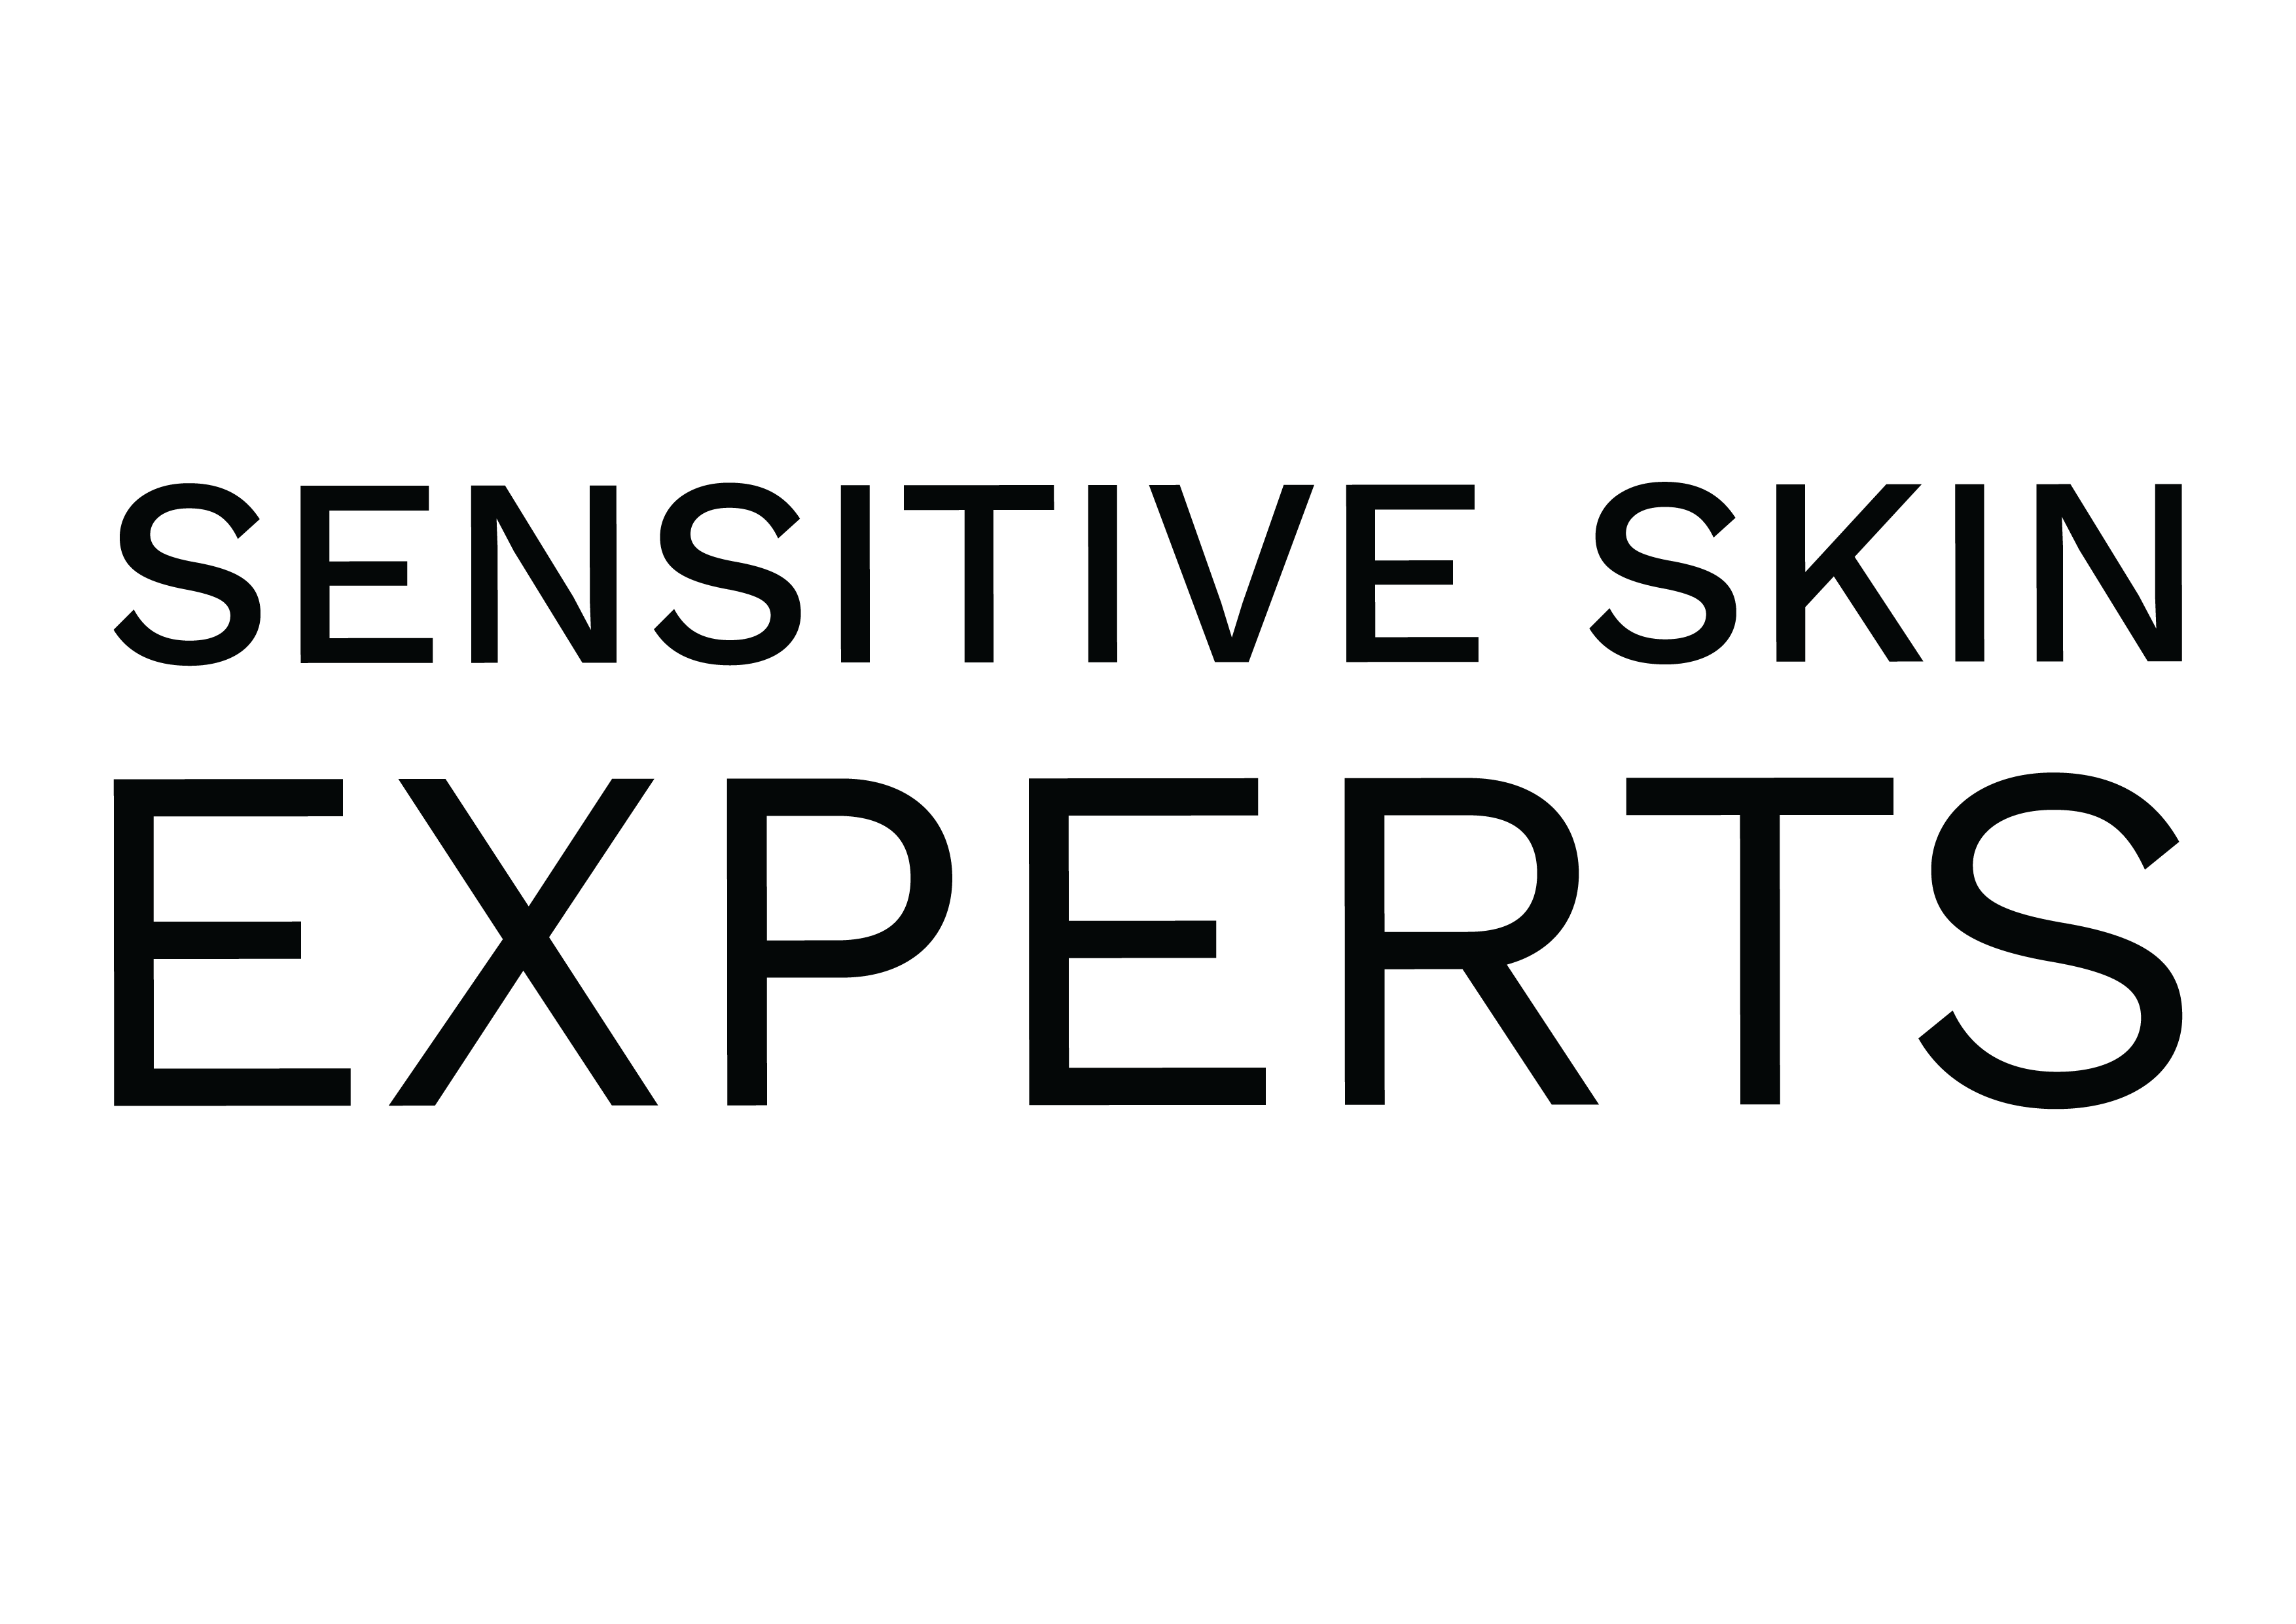 Sensitive_Skin_Experts-02_21c9c988-aa62-4d23-b9fa-6f3174e0bb41.png